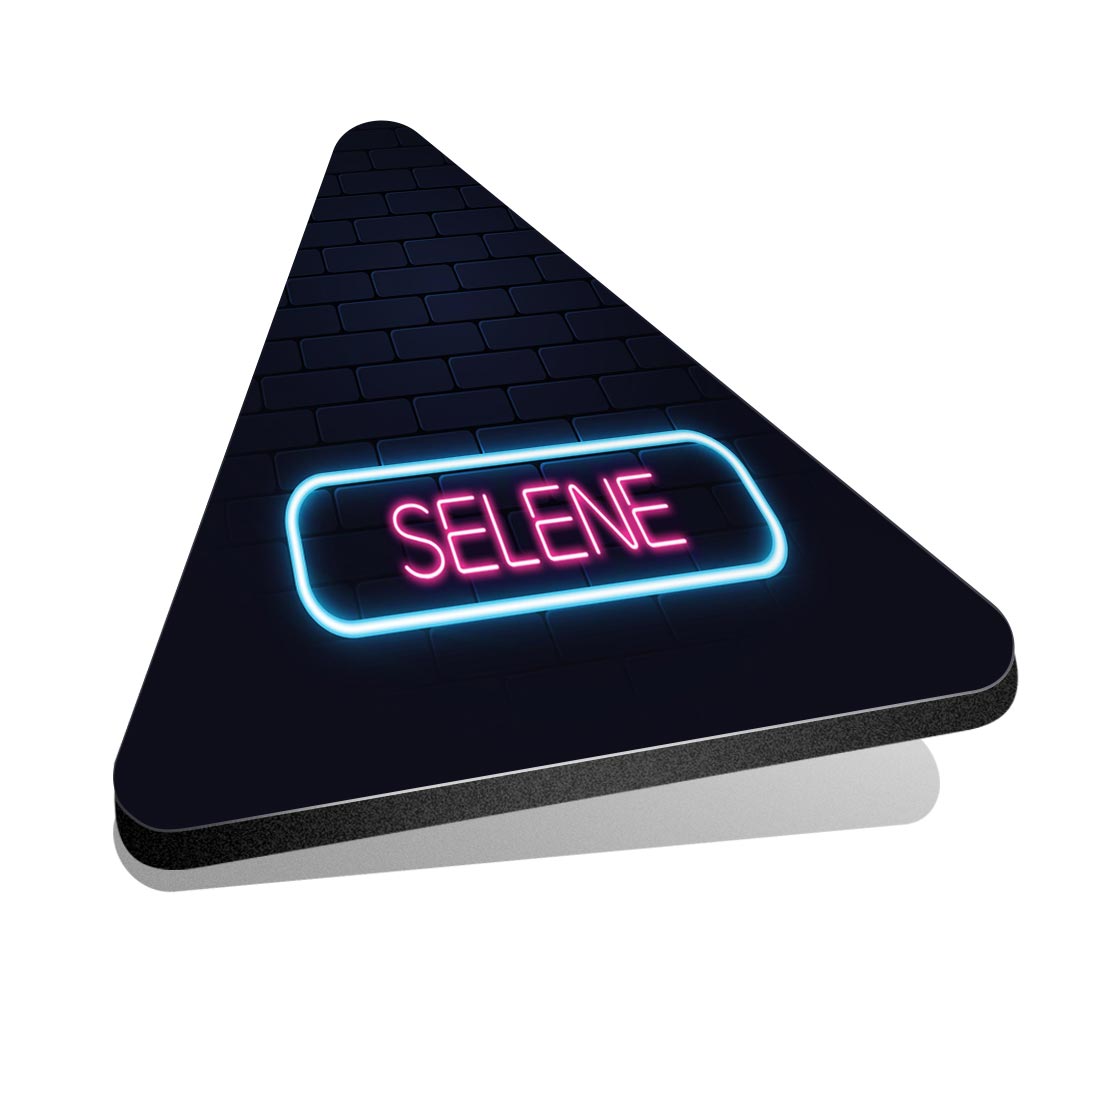 1x Triangle Fridge MDF Magnet Neon Sign Design Selene Name #353496 - Picture 1 of 1